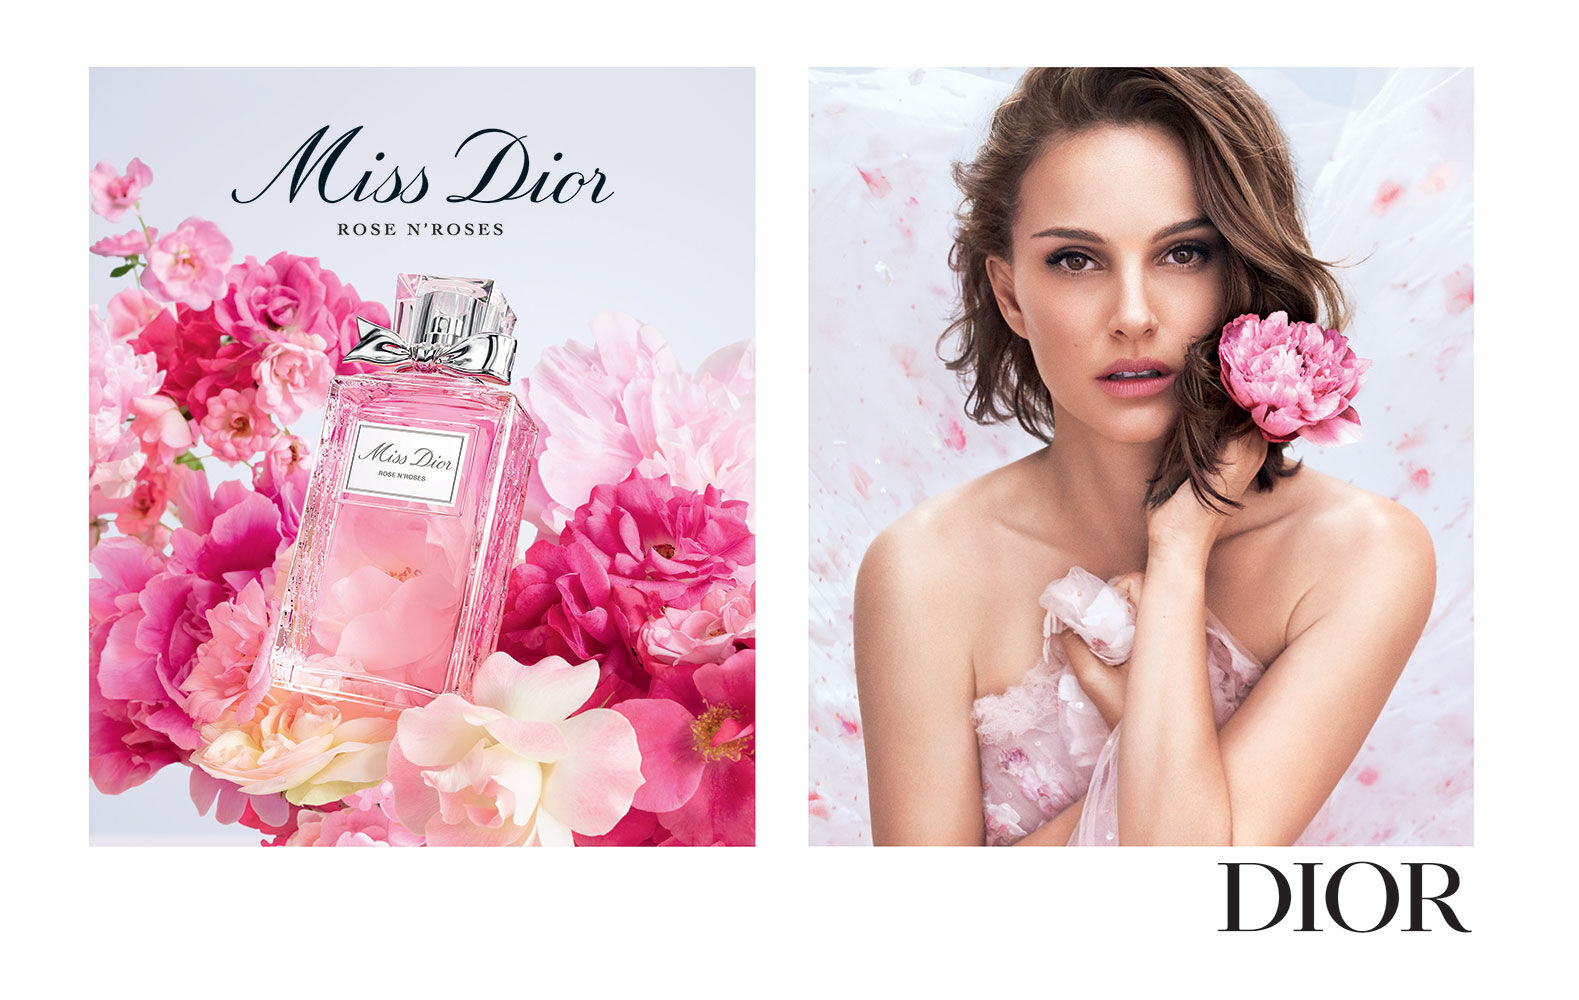 Dior and Roses - Triển lãm hoa hồng trong thế giới thời trang Dior-10